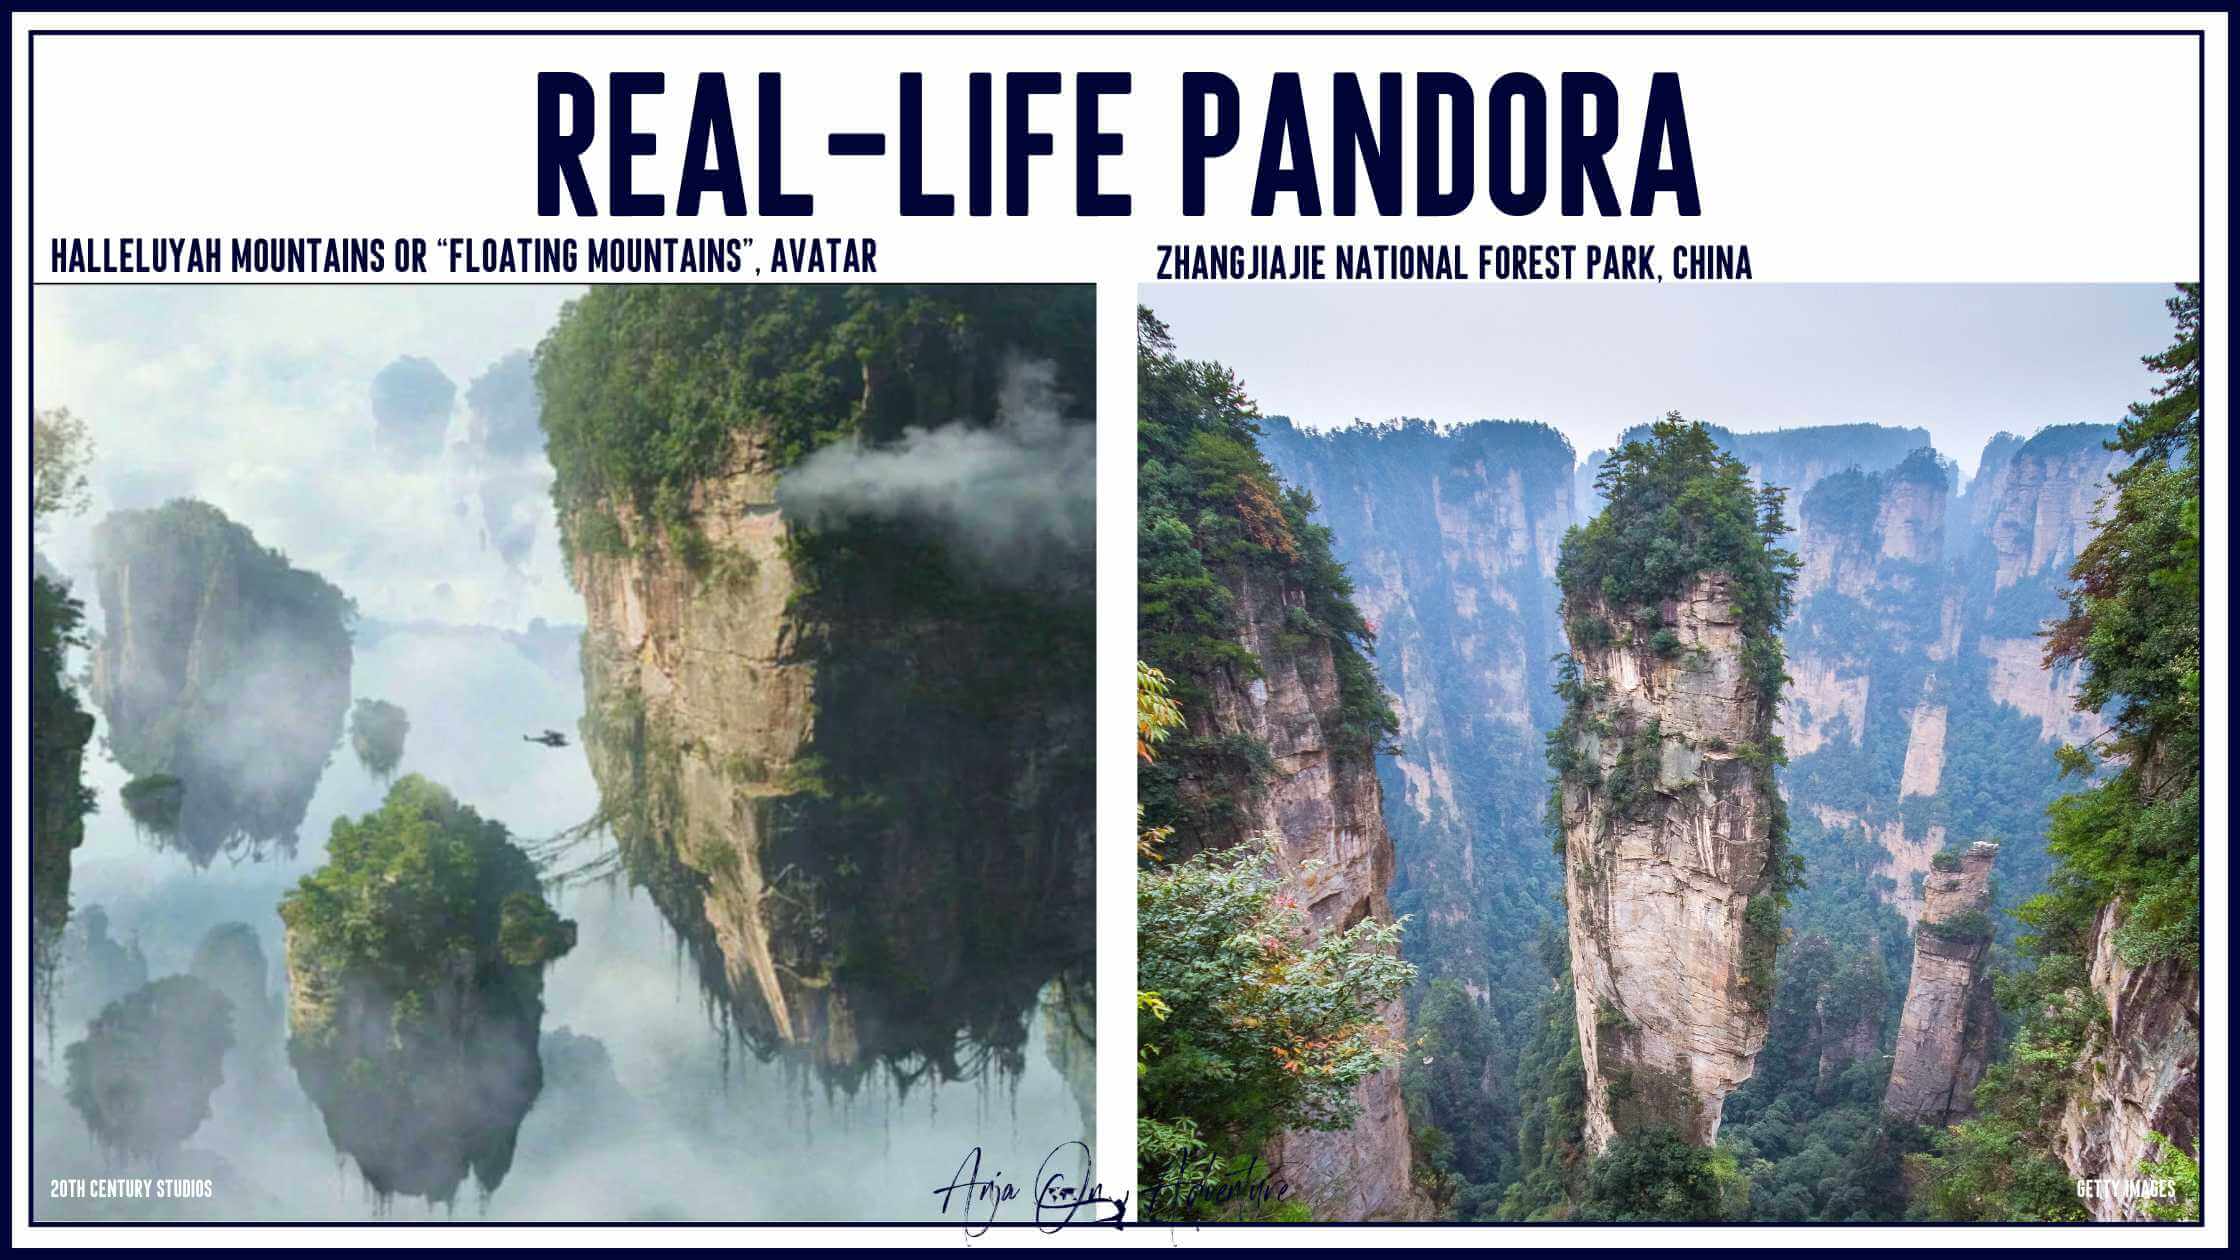 Stunning Pandora Destinations Every Avatar Fan Should Visit. Similarities between Halleluyah mountains and Zhangjiajie National Forest Park.